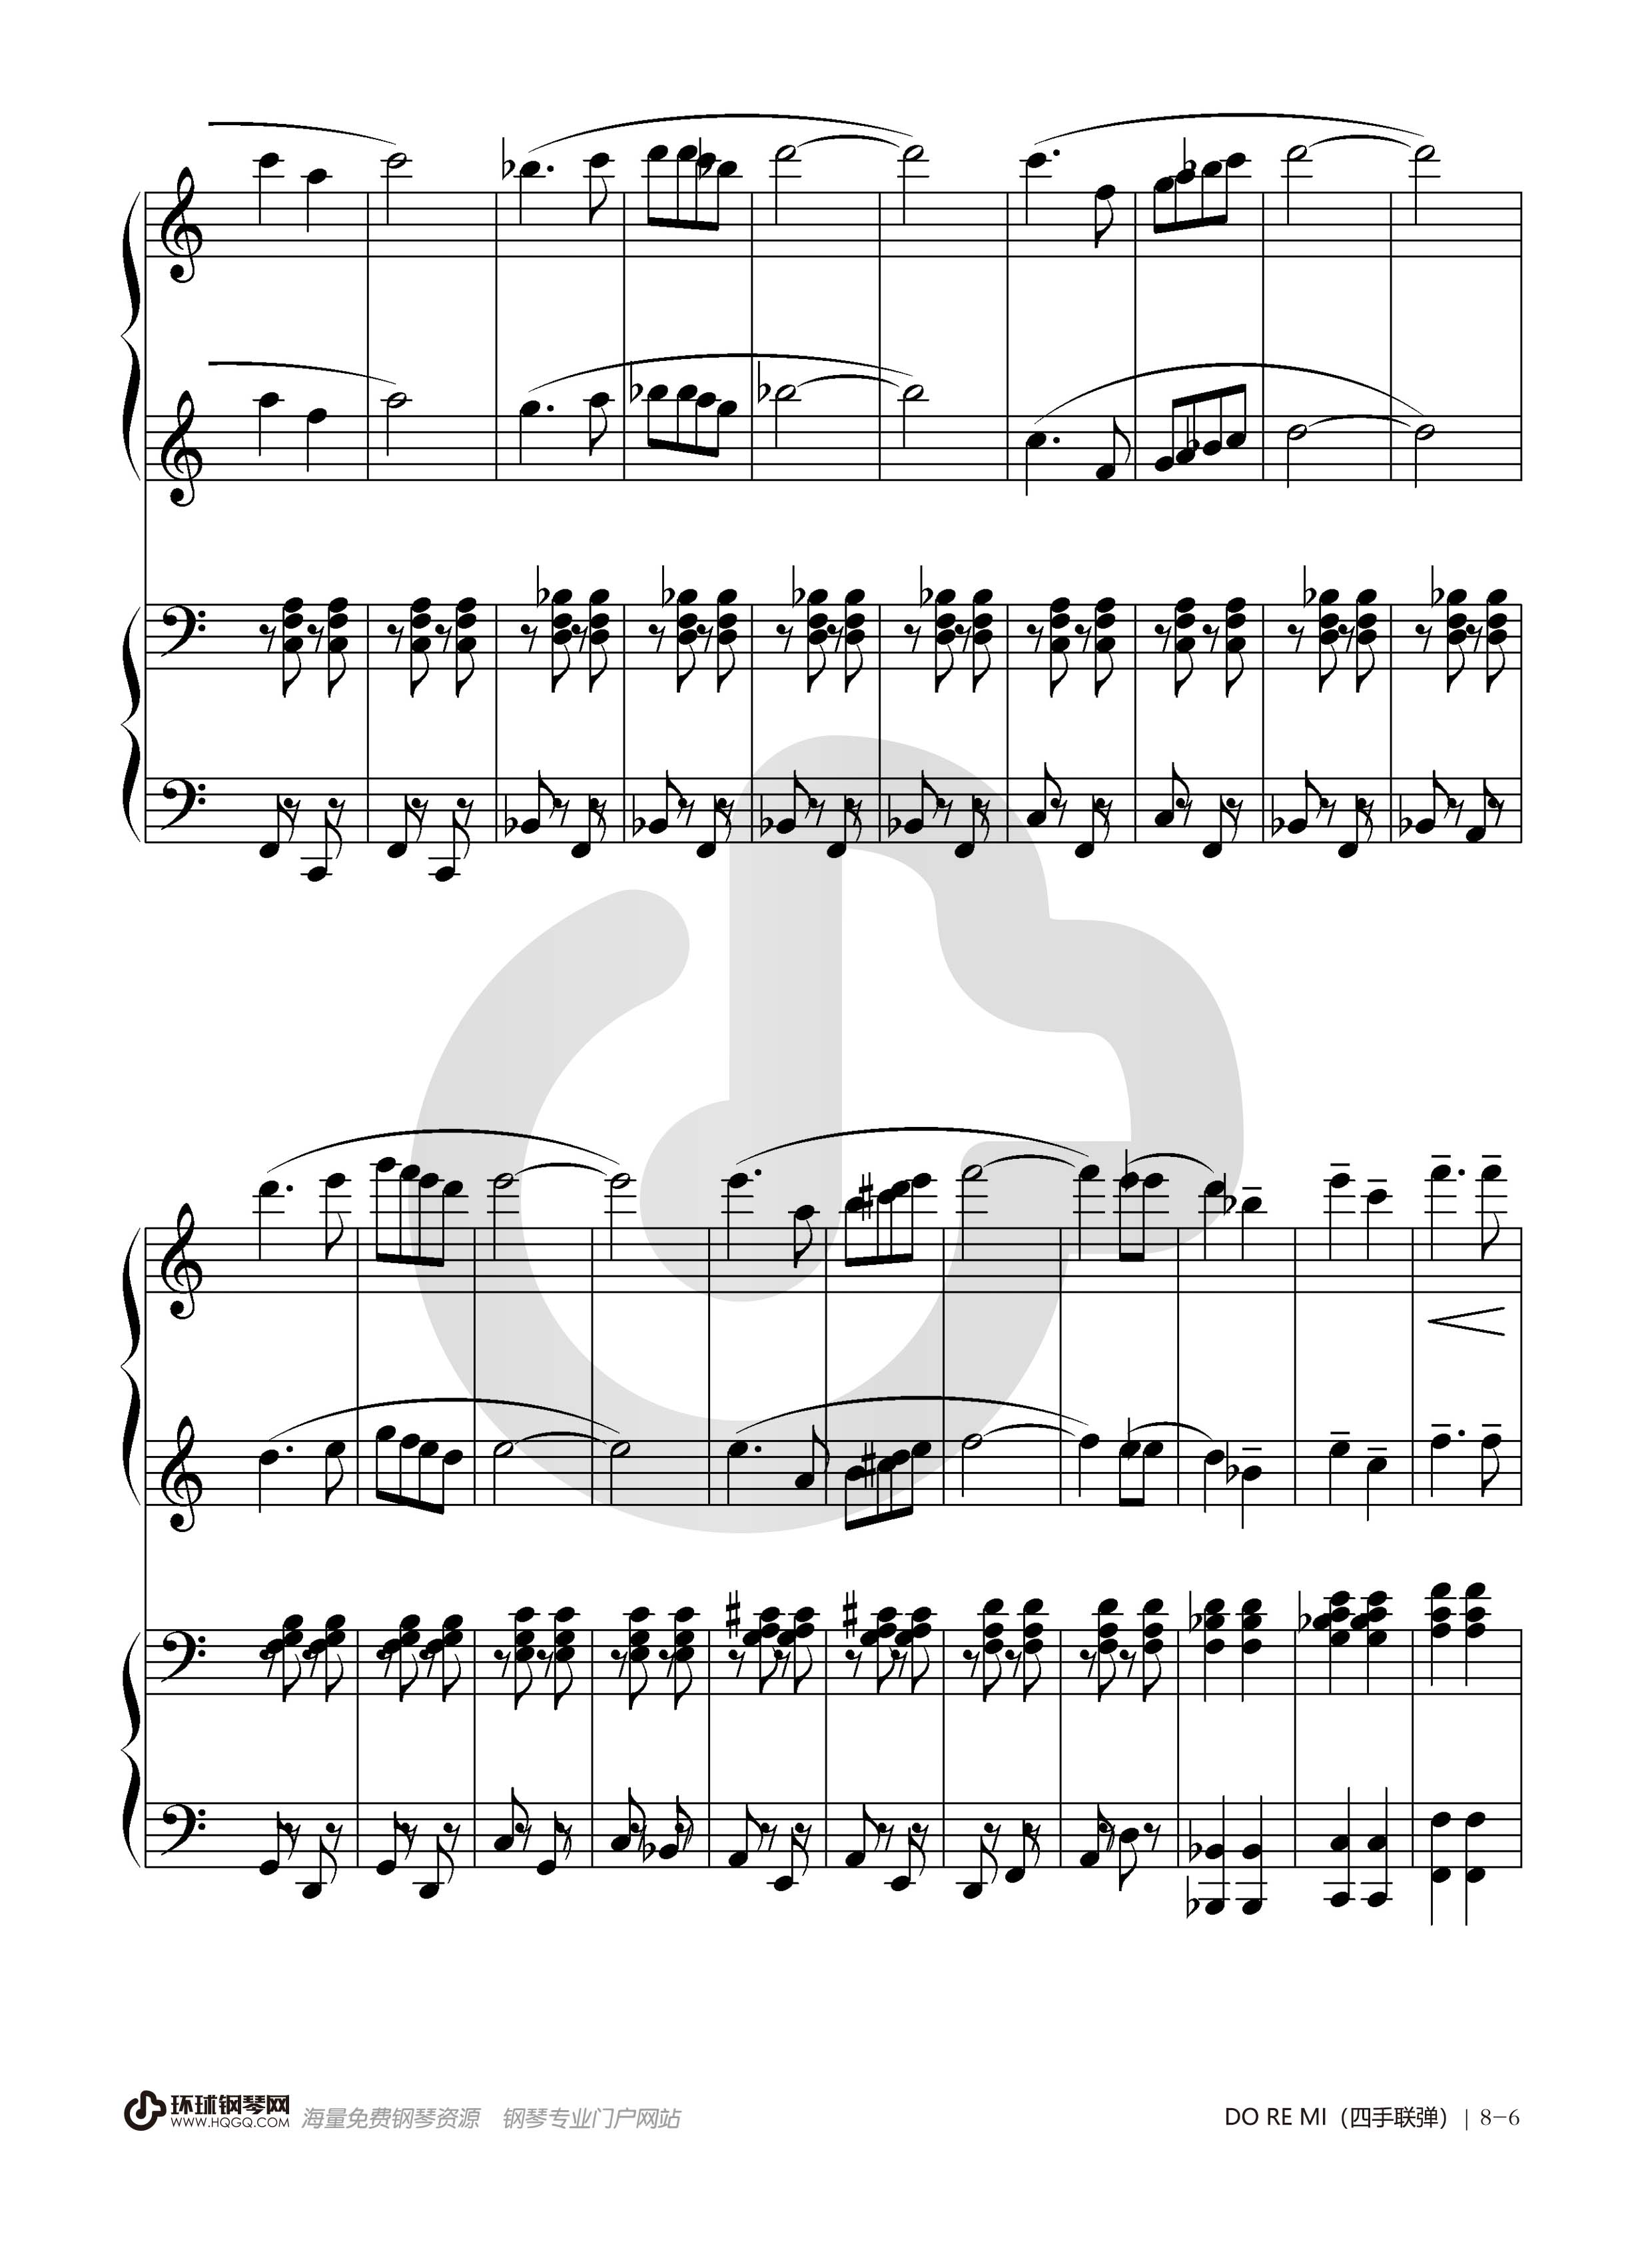 钢琴谱doremifaso音谱图片